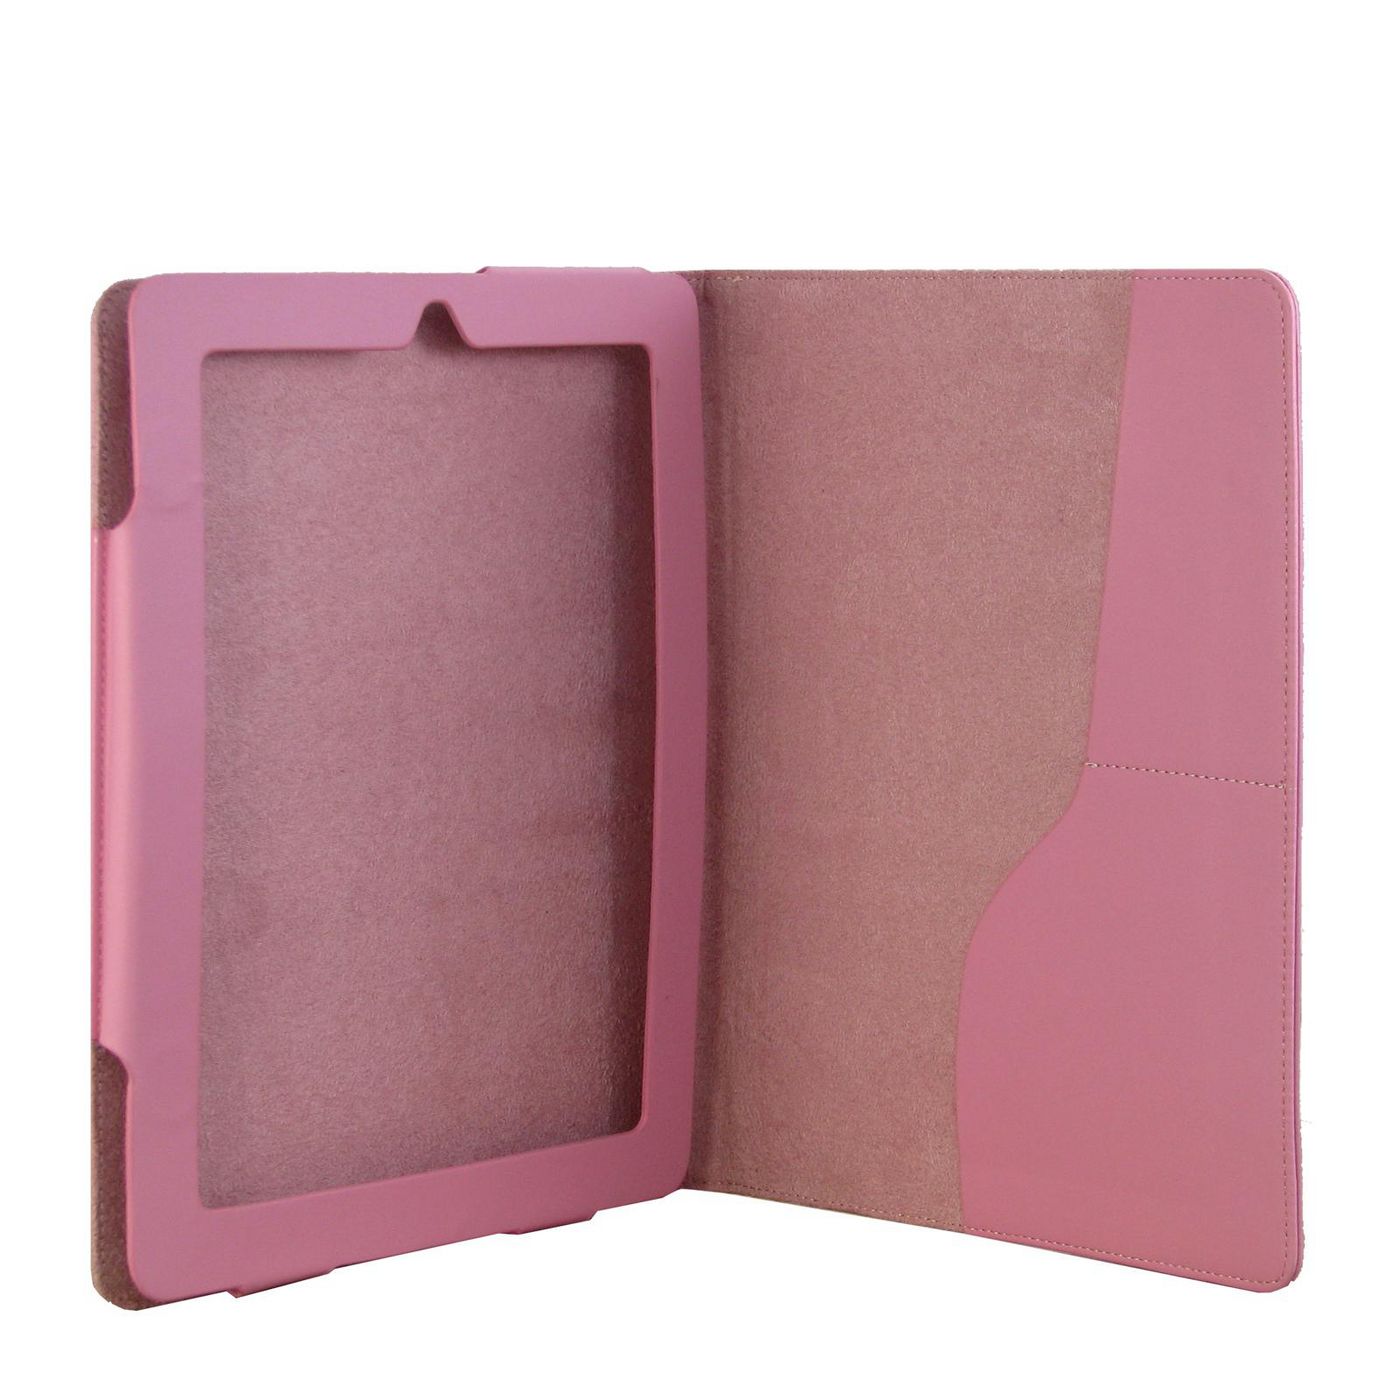 INTERTECH Ls-1061 C Flip Case Pink